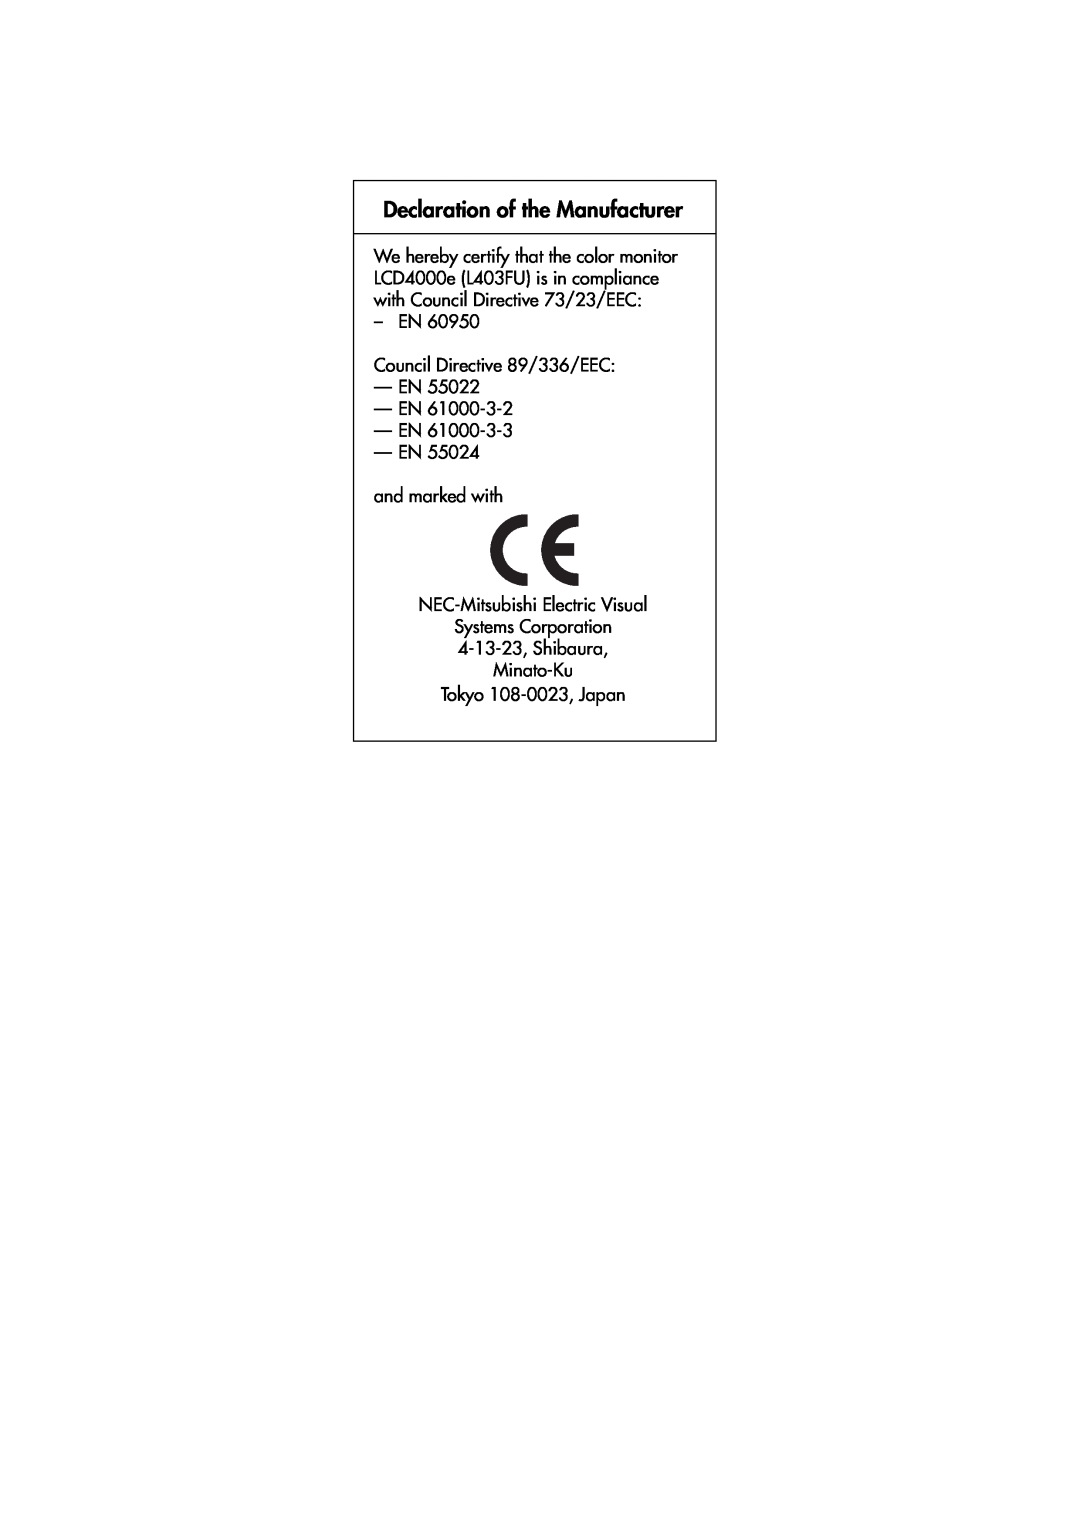 NEC LCD4000e manual Declaration of the Manufacturer, EN Council Directive 89/336/EEC —EN —EN —EN —EN, Tokyo 108-0023,Japan 